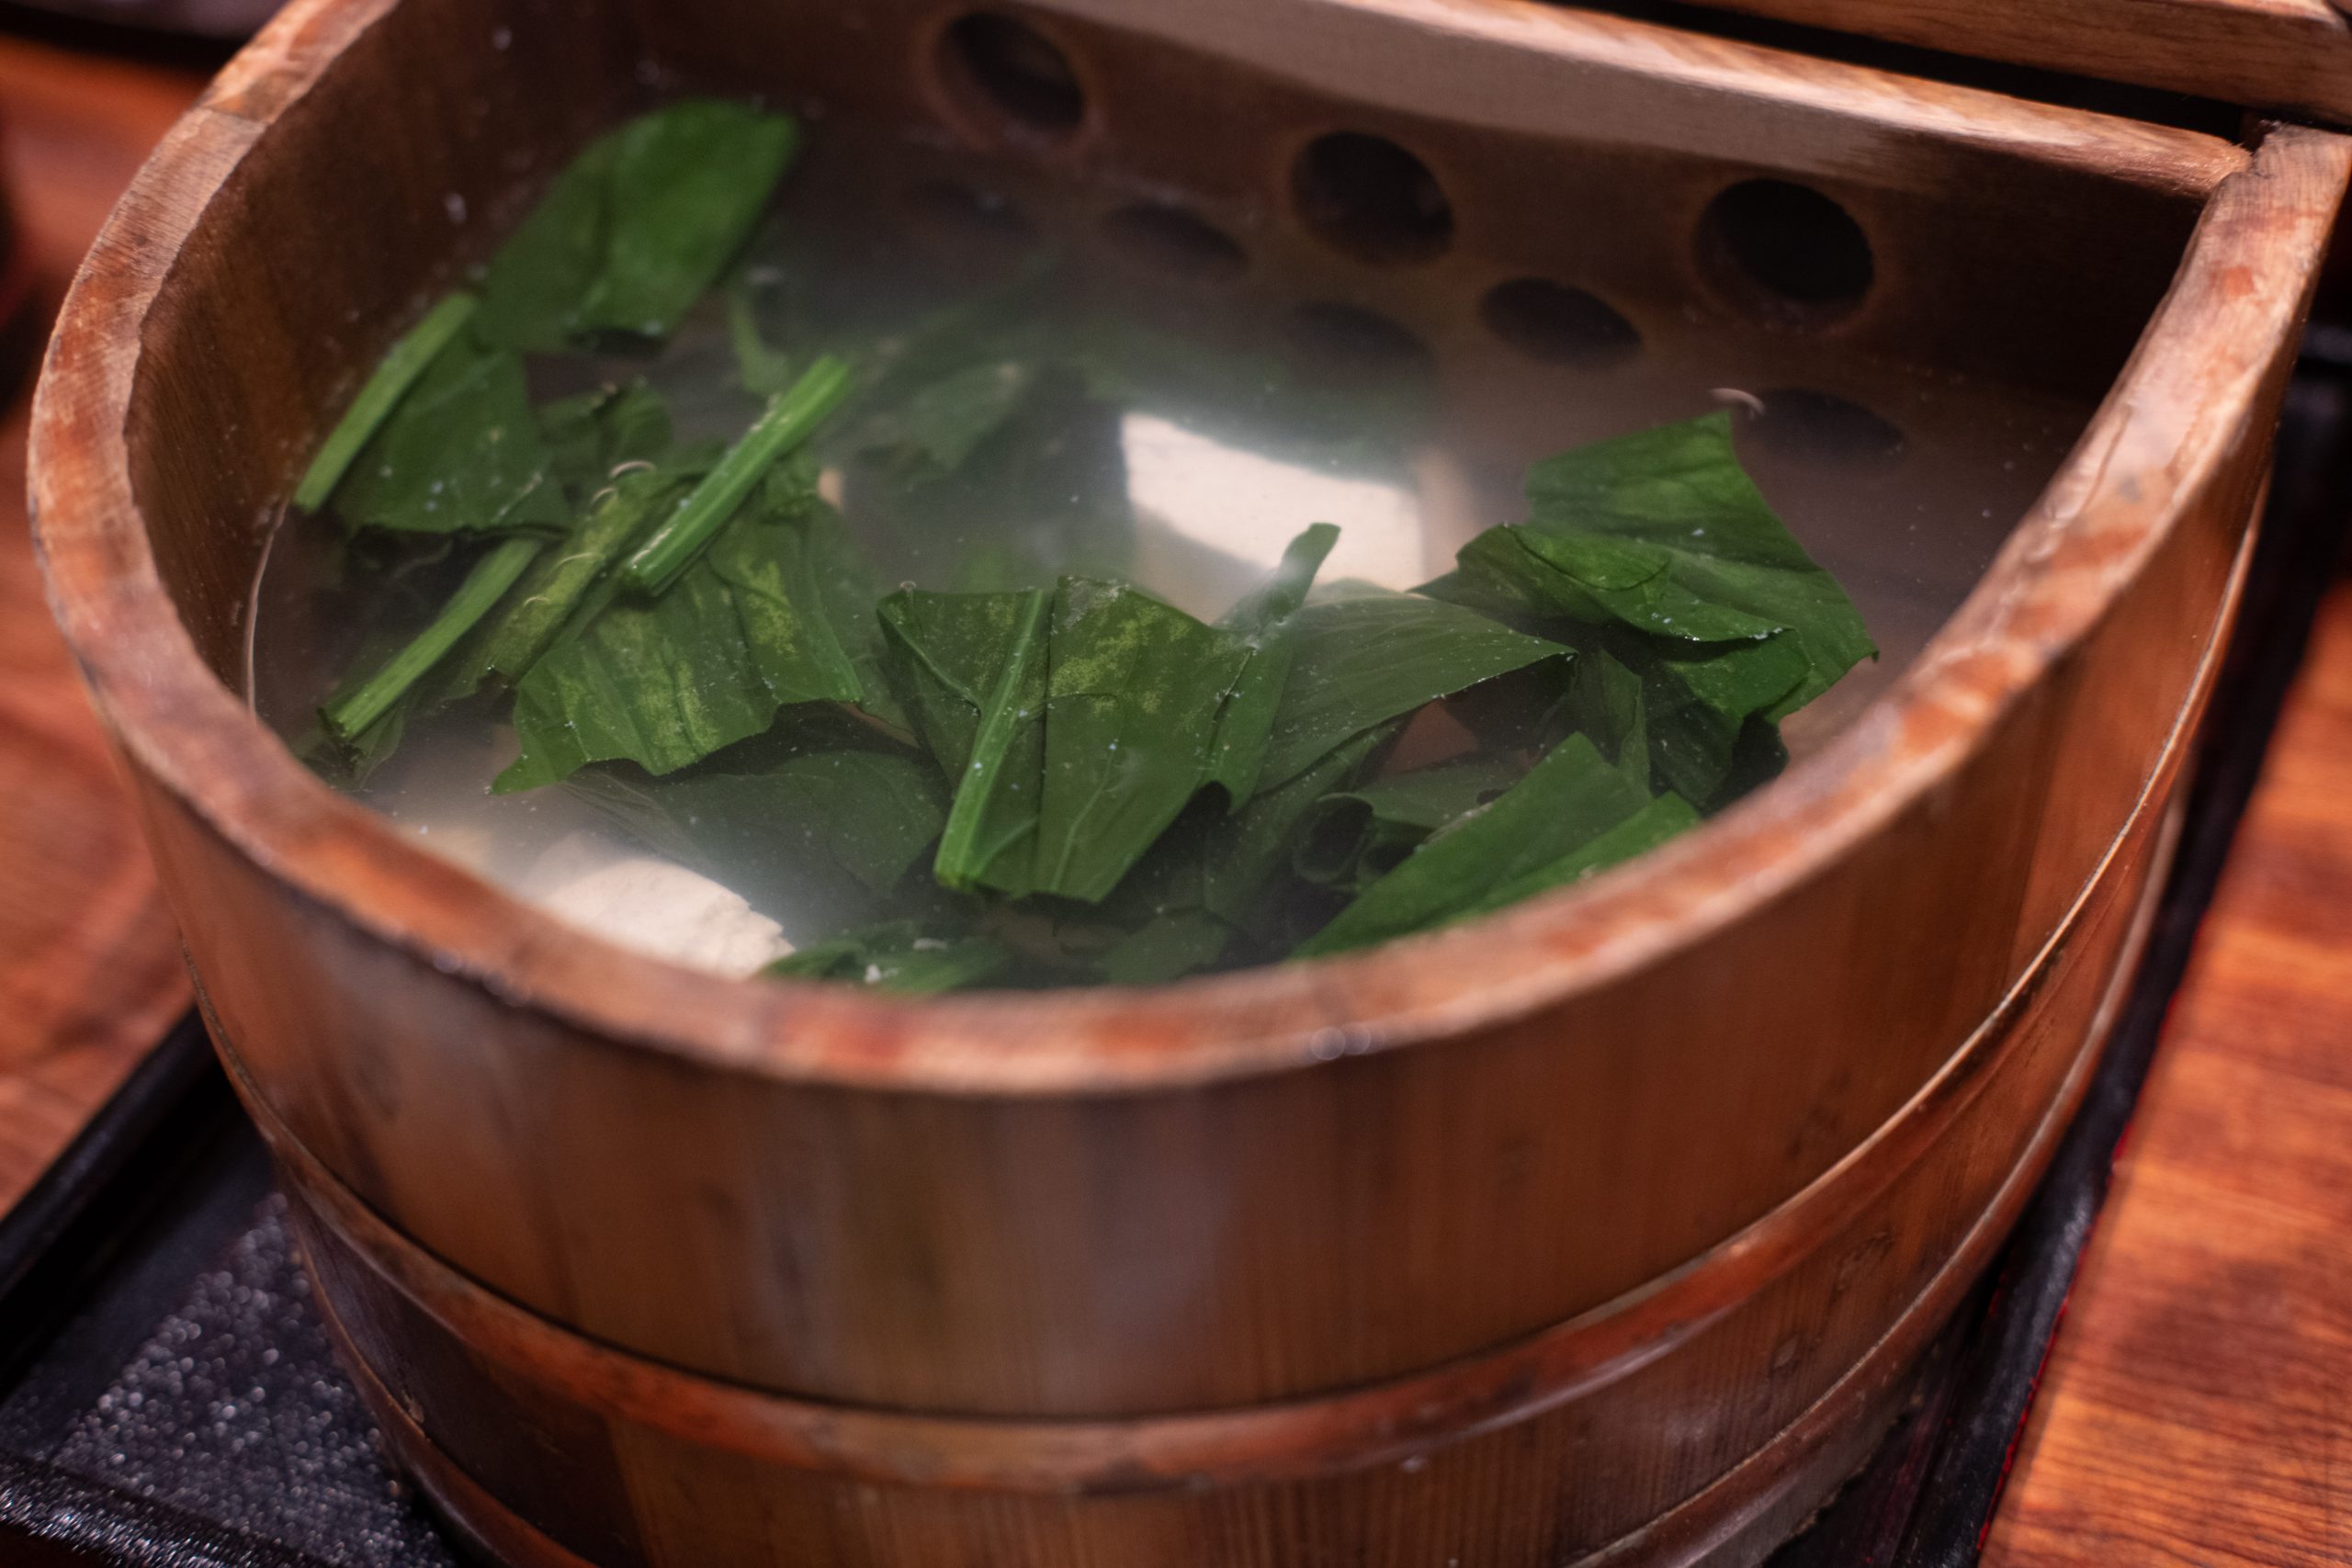 Boiled yudofu in a Japanese hot pot